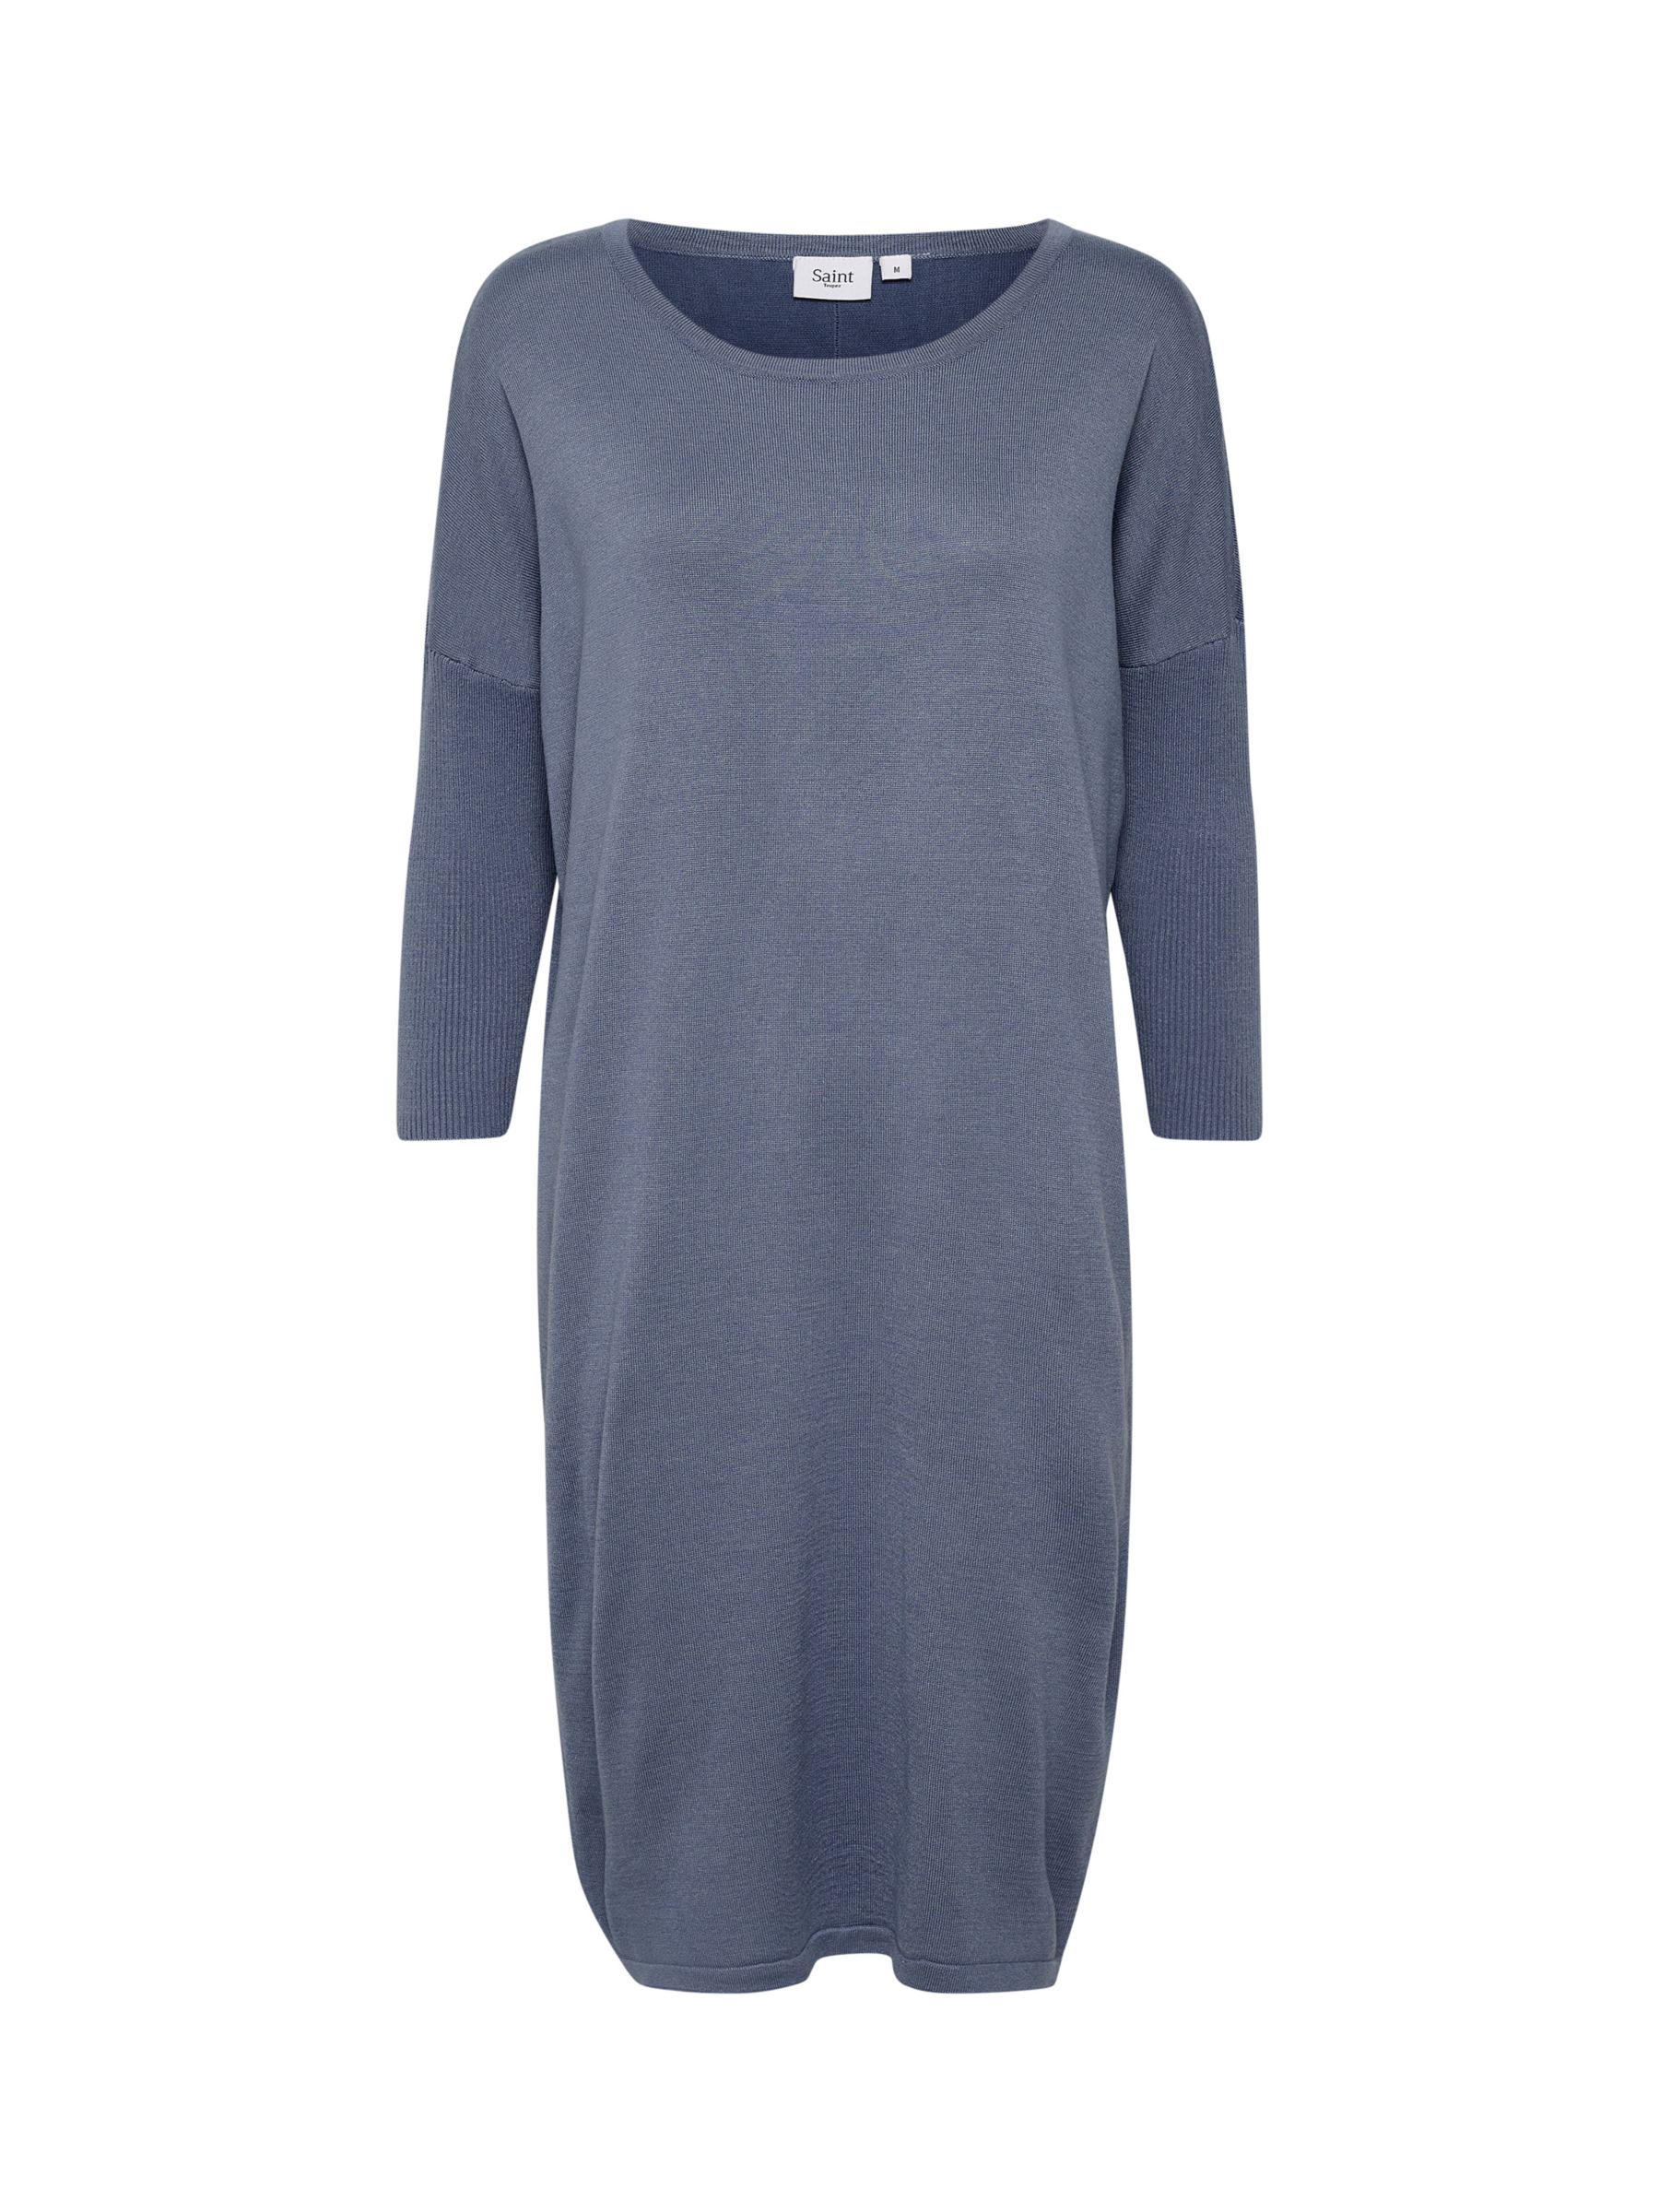 Buy Saint Tropez Mila Knee Length Dress, Colony Blue Online at johnlewis.com